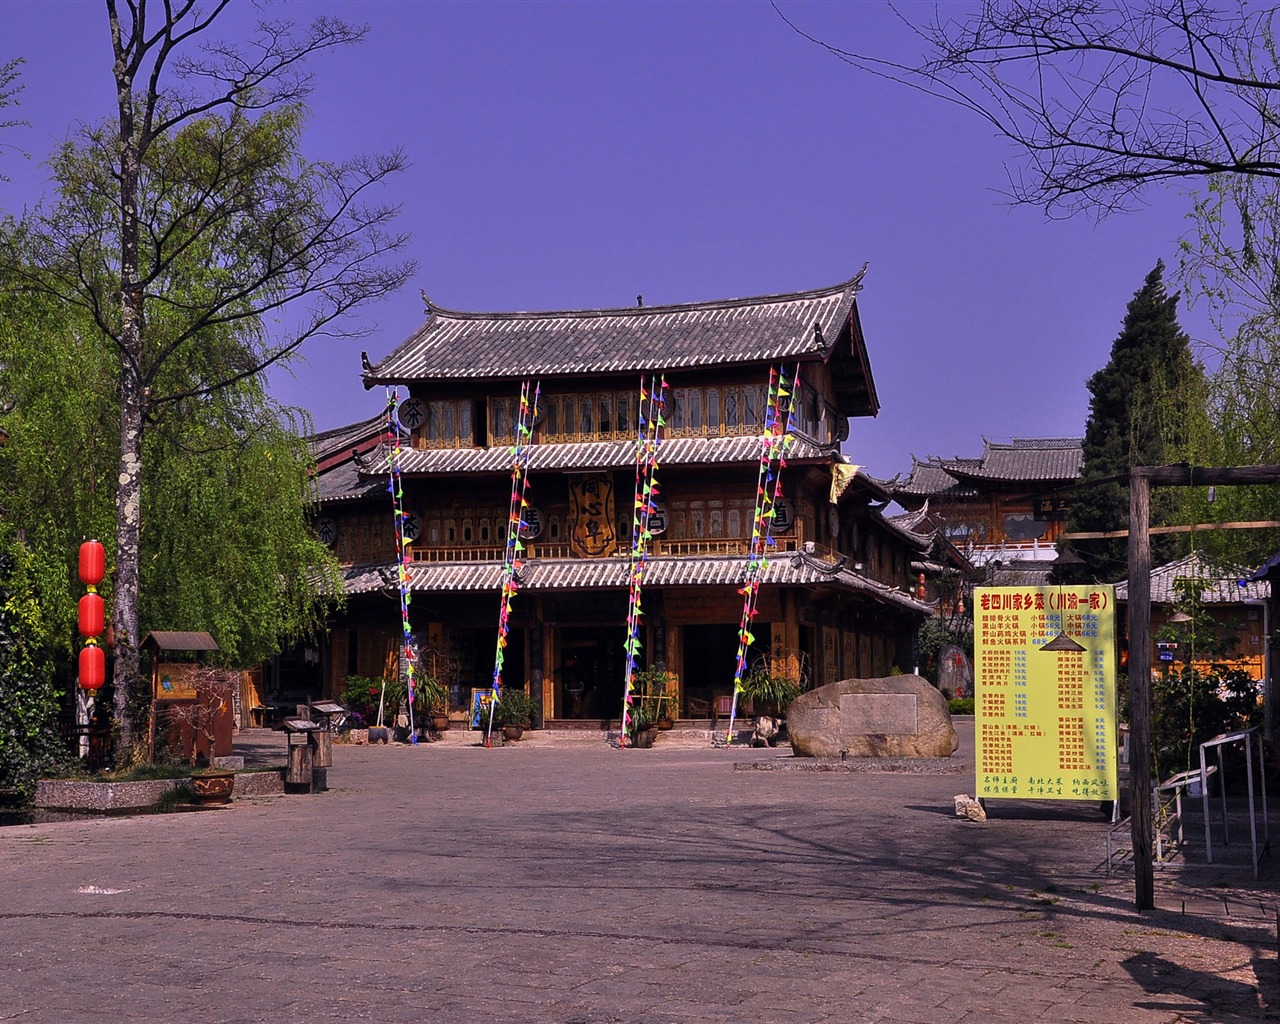 Lijiang ancient town atmosphere (2) (old Hong OK works) #18 - 1280x1024